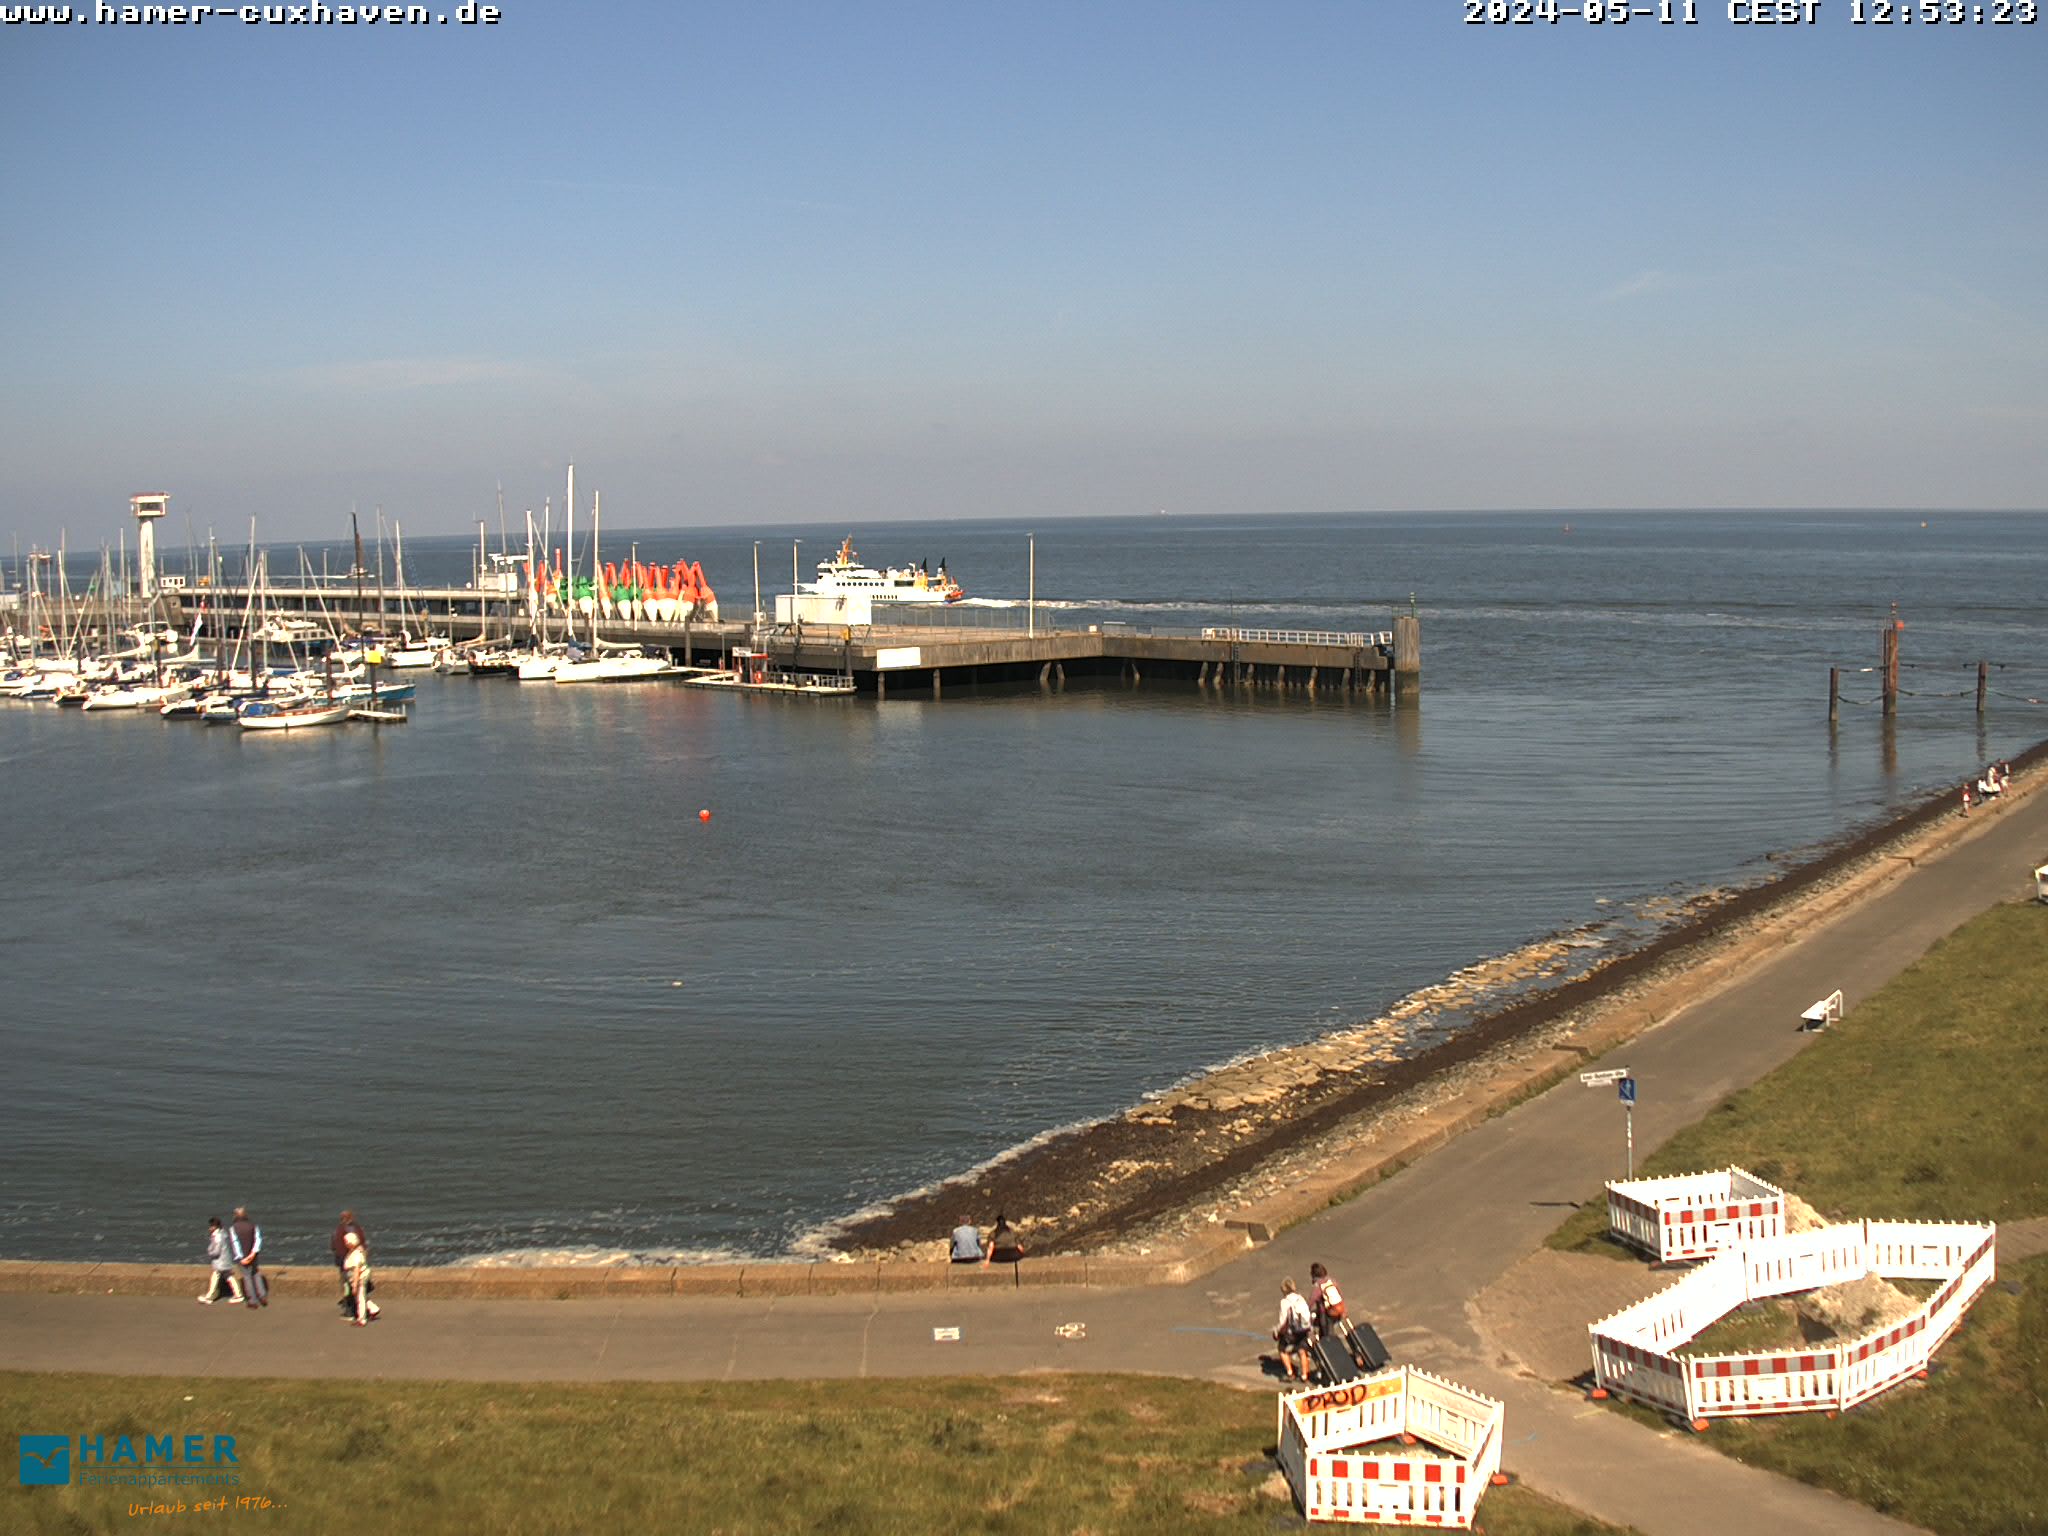 Cuxhaven Mer. 12:55